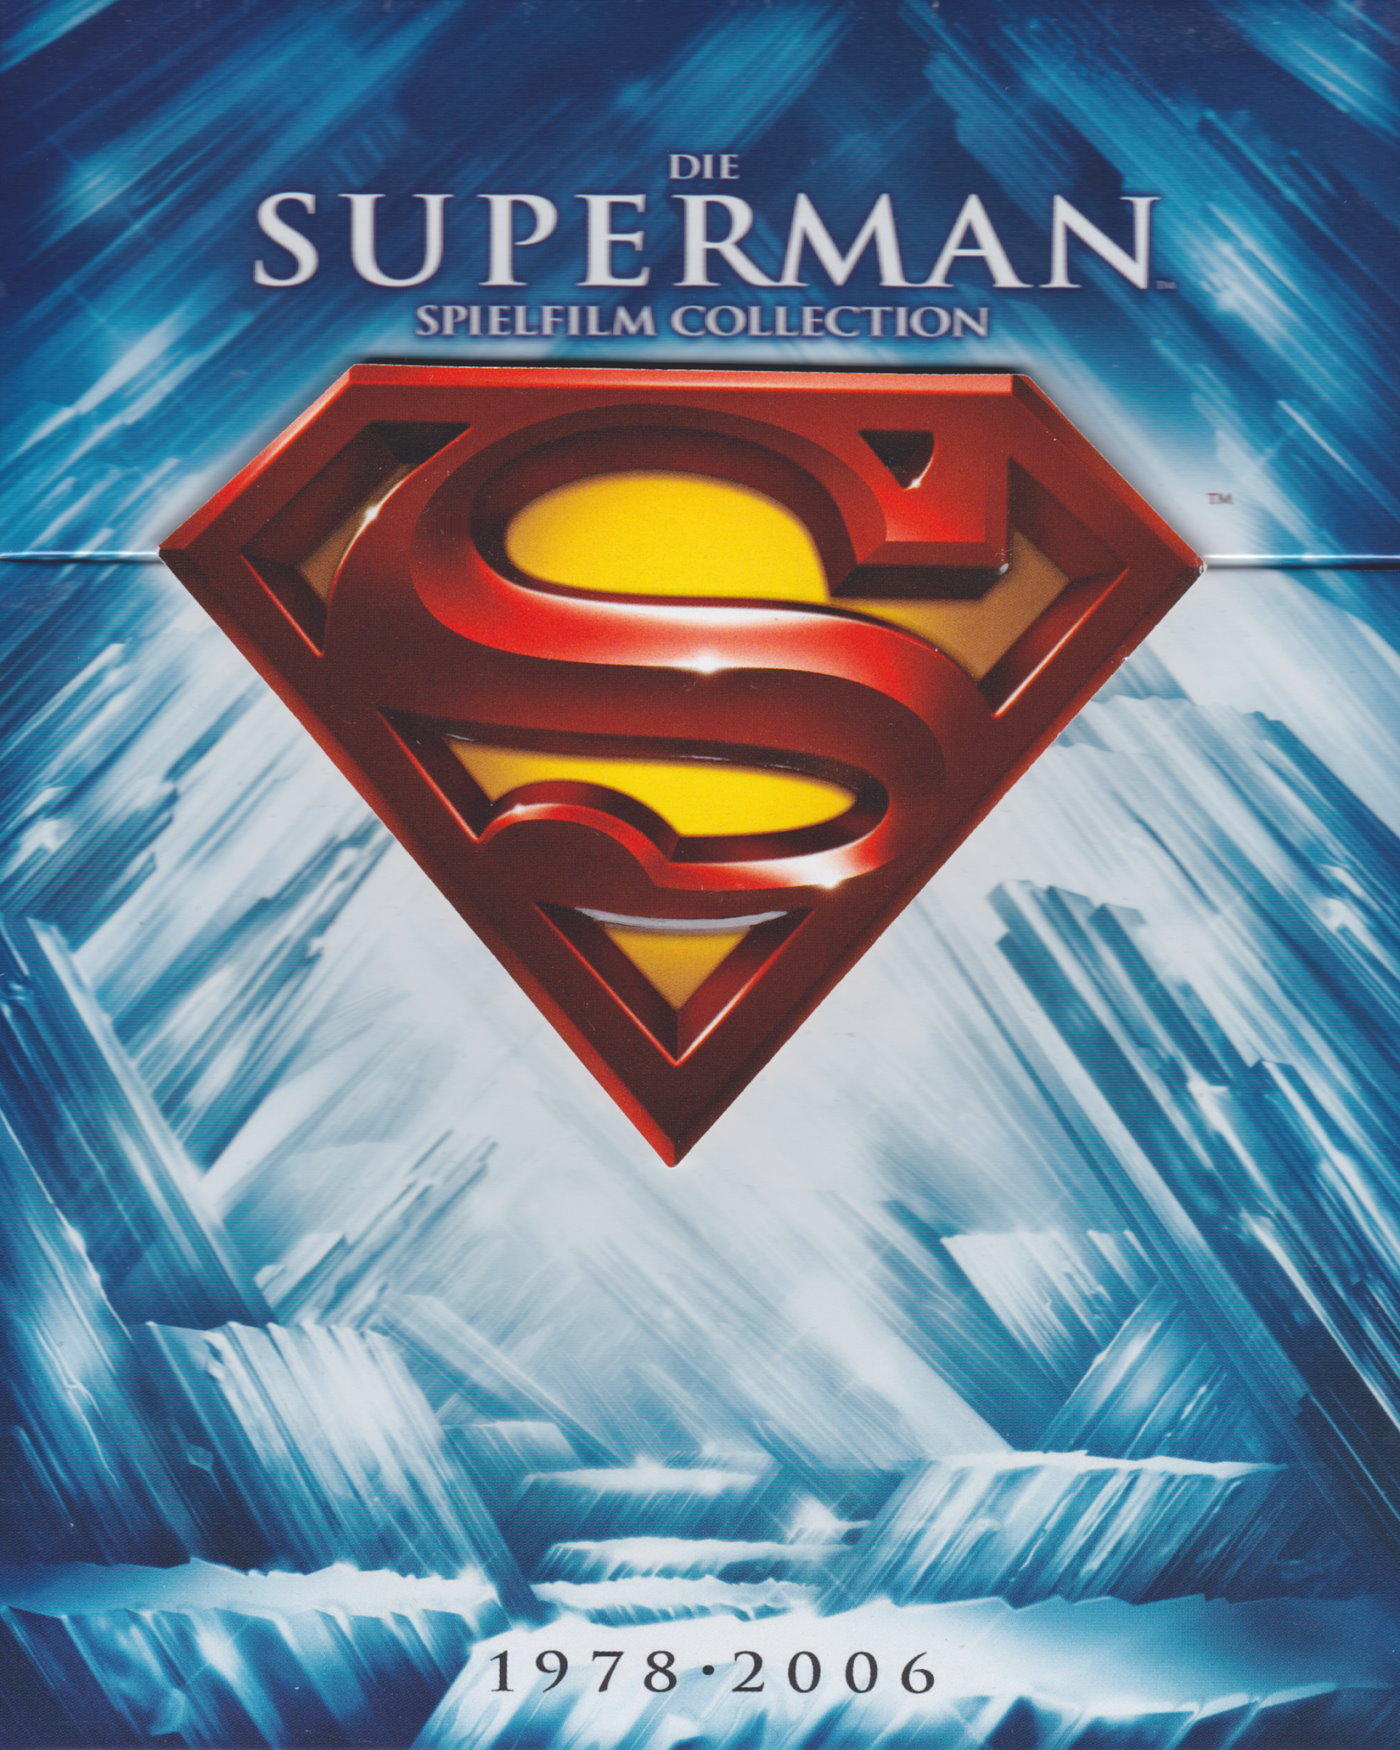 Cover - Superman III - Der stählerne Blitz.jpg